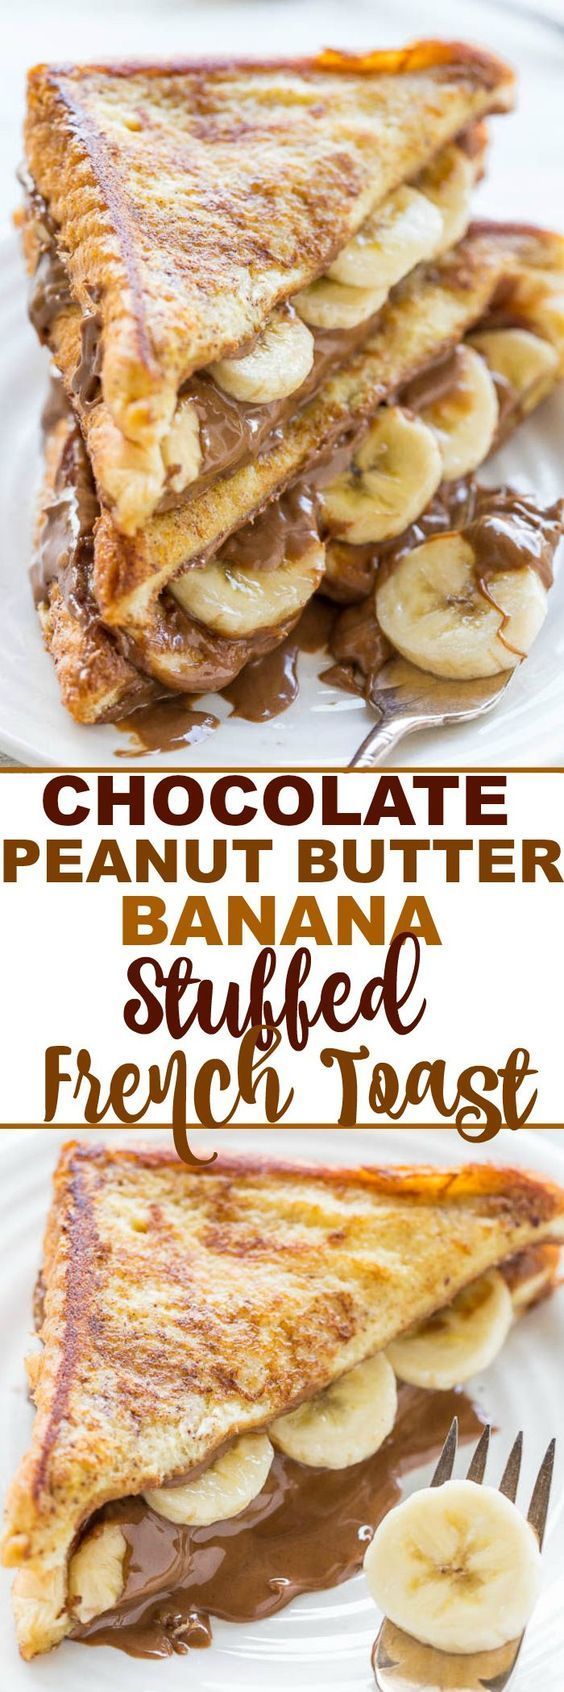 Chocolate Peanut Butter Banana Stuffed French Toast